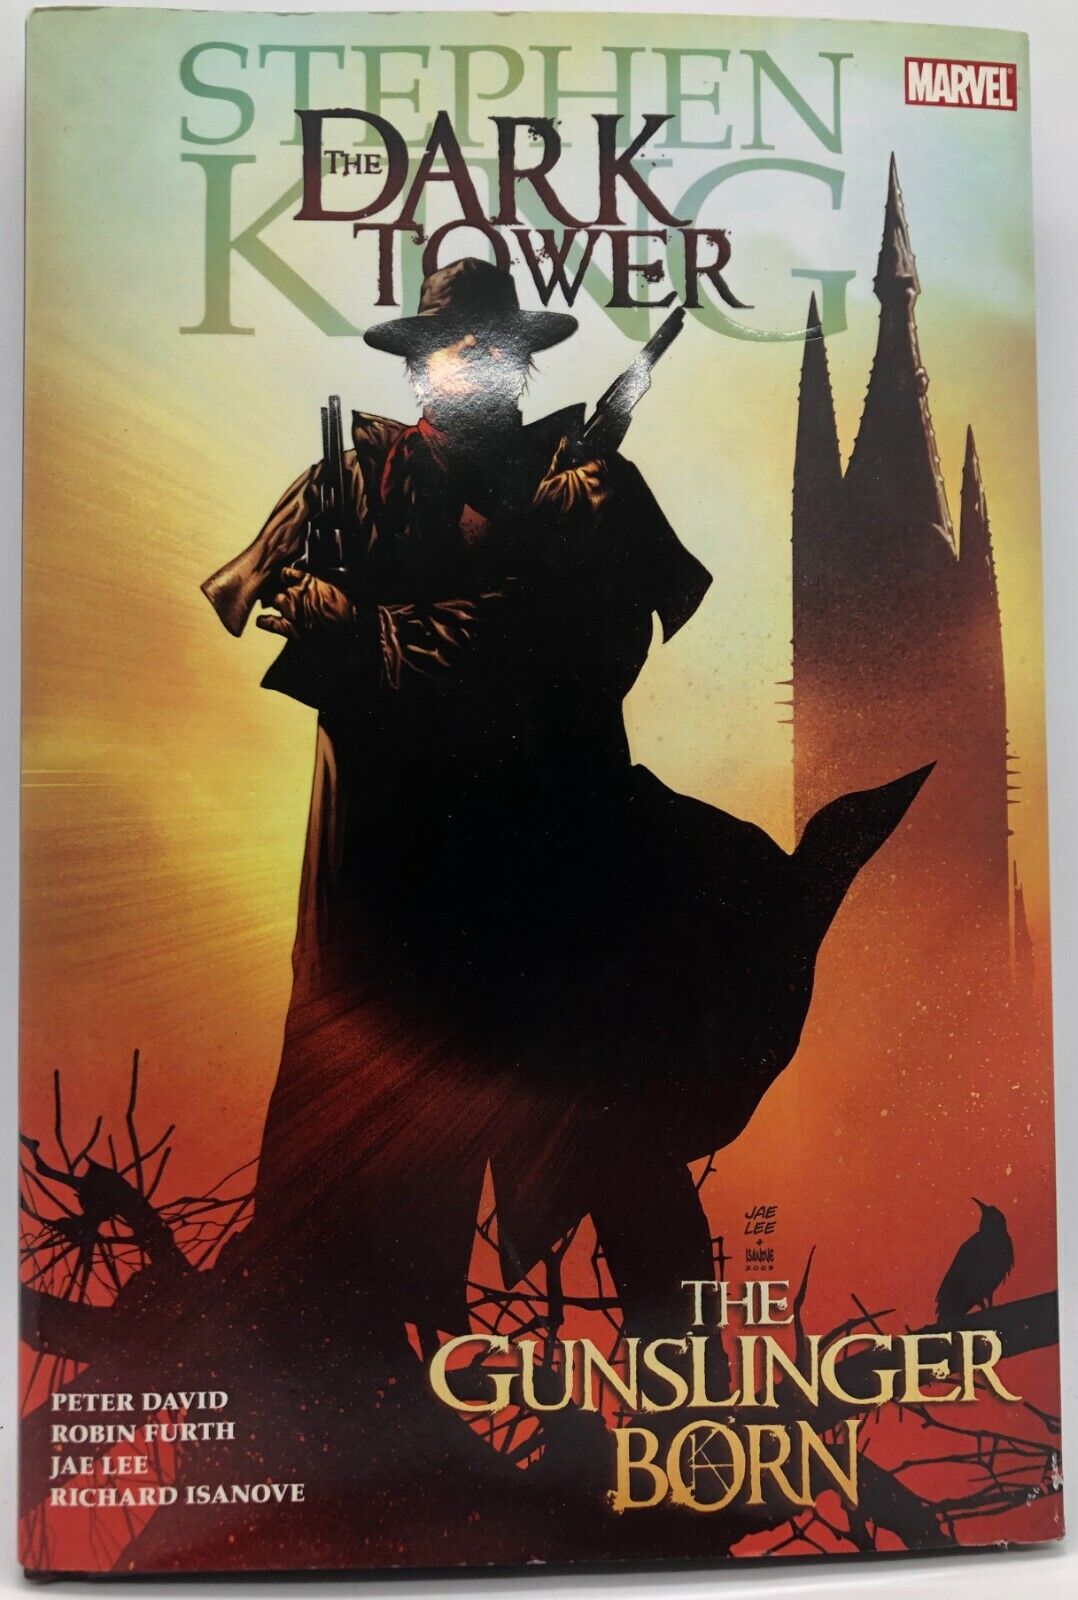 Stephen King Dark Tower : The Gunslinger Born Graphic Novel Peter David HC/DJ 